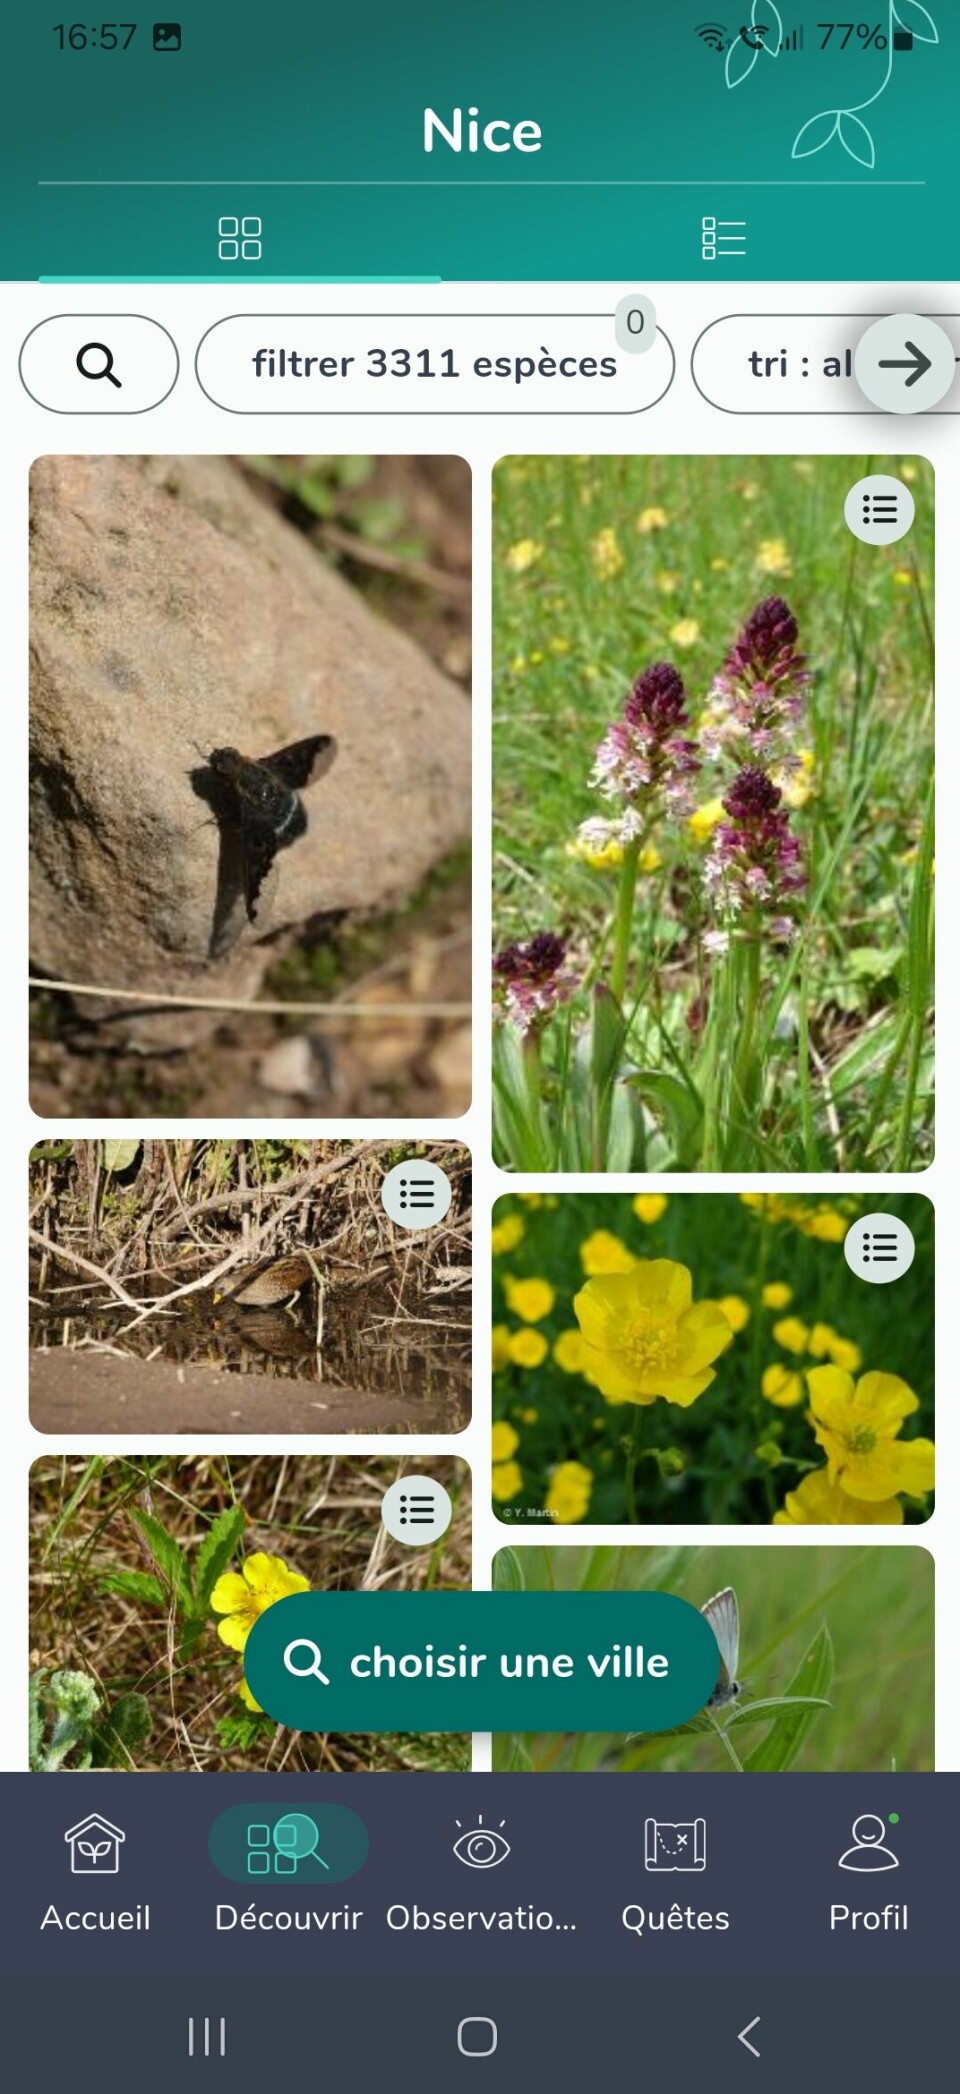 INPN Espèces app, upload images of plants and wildlife